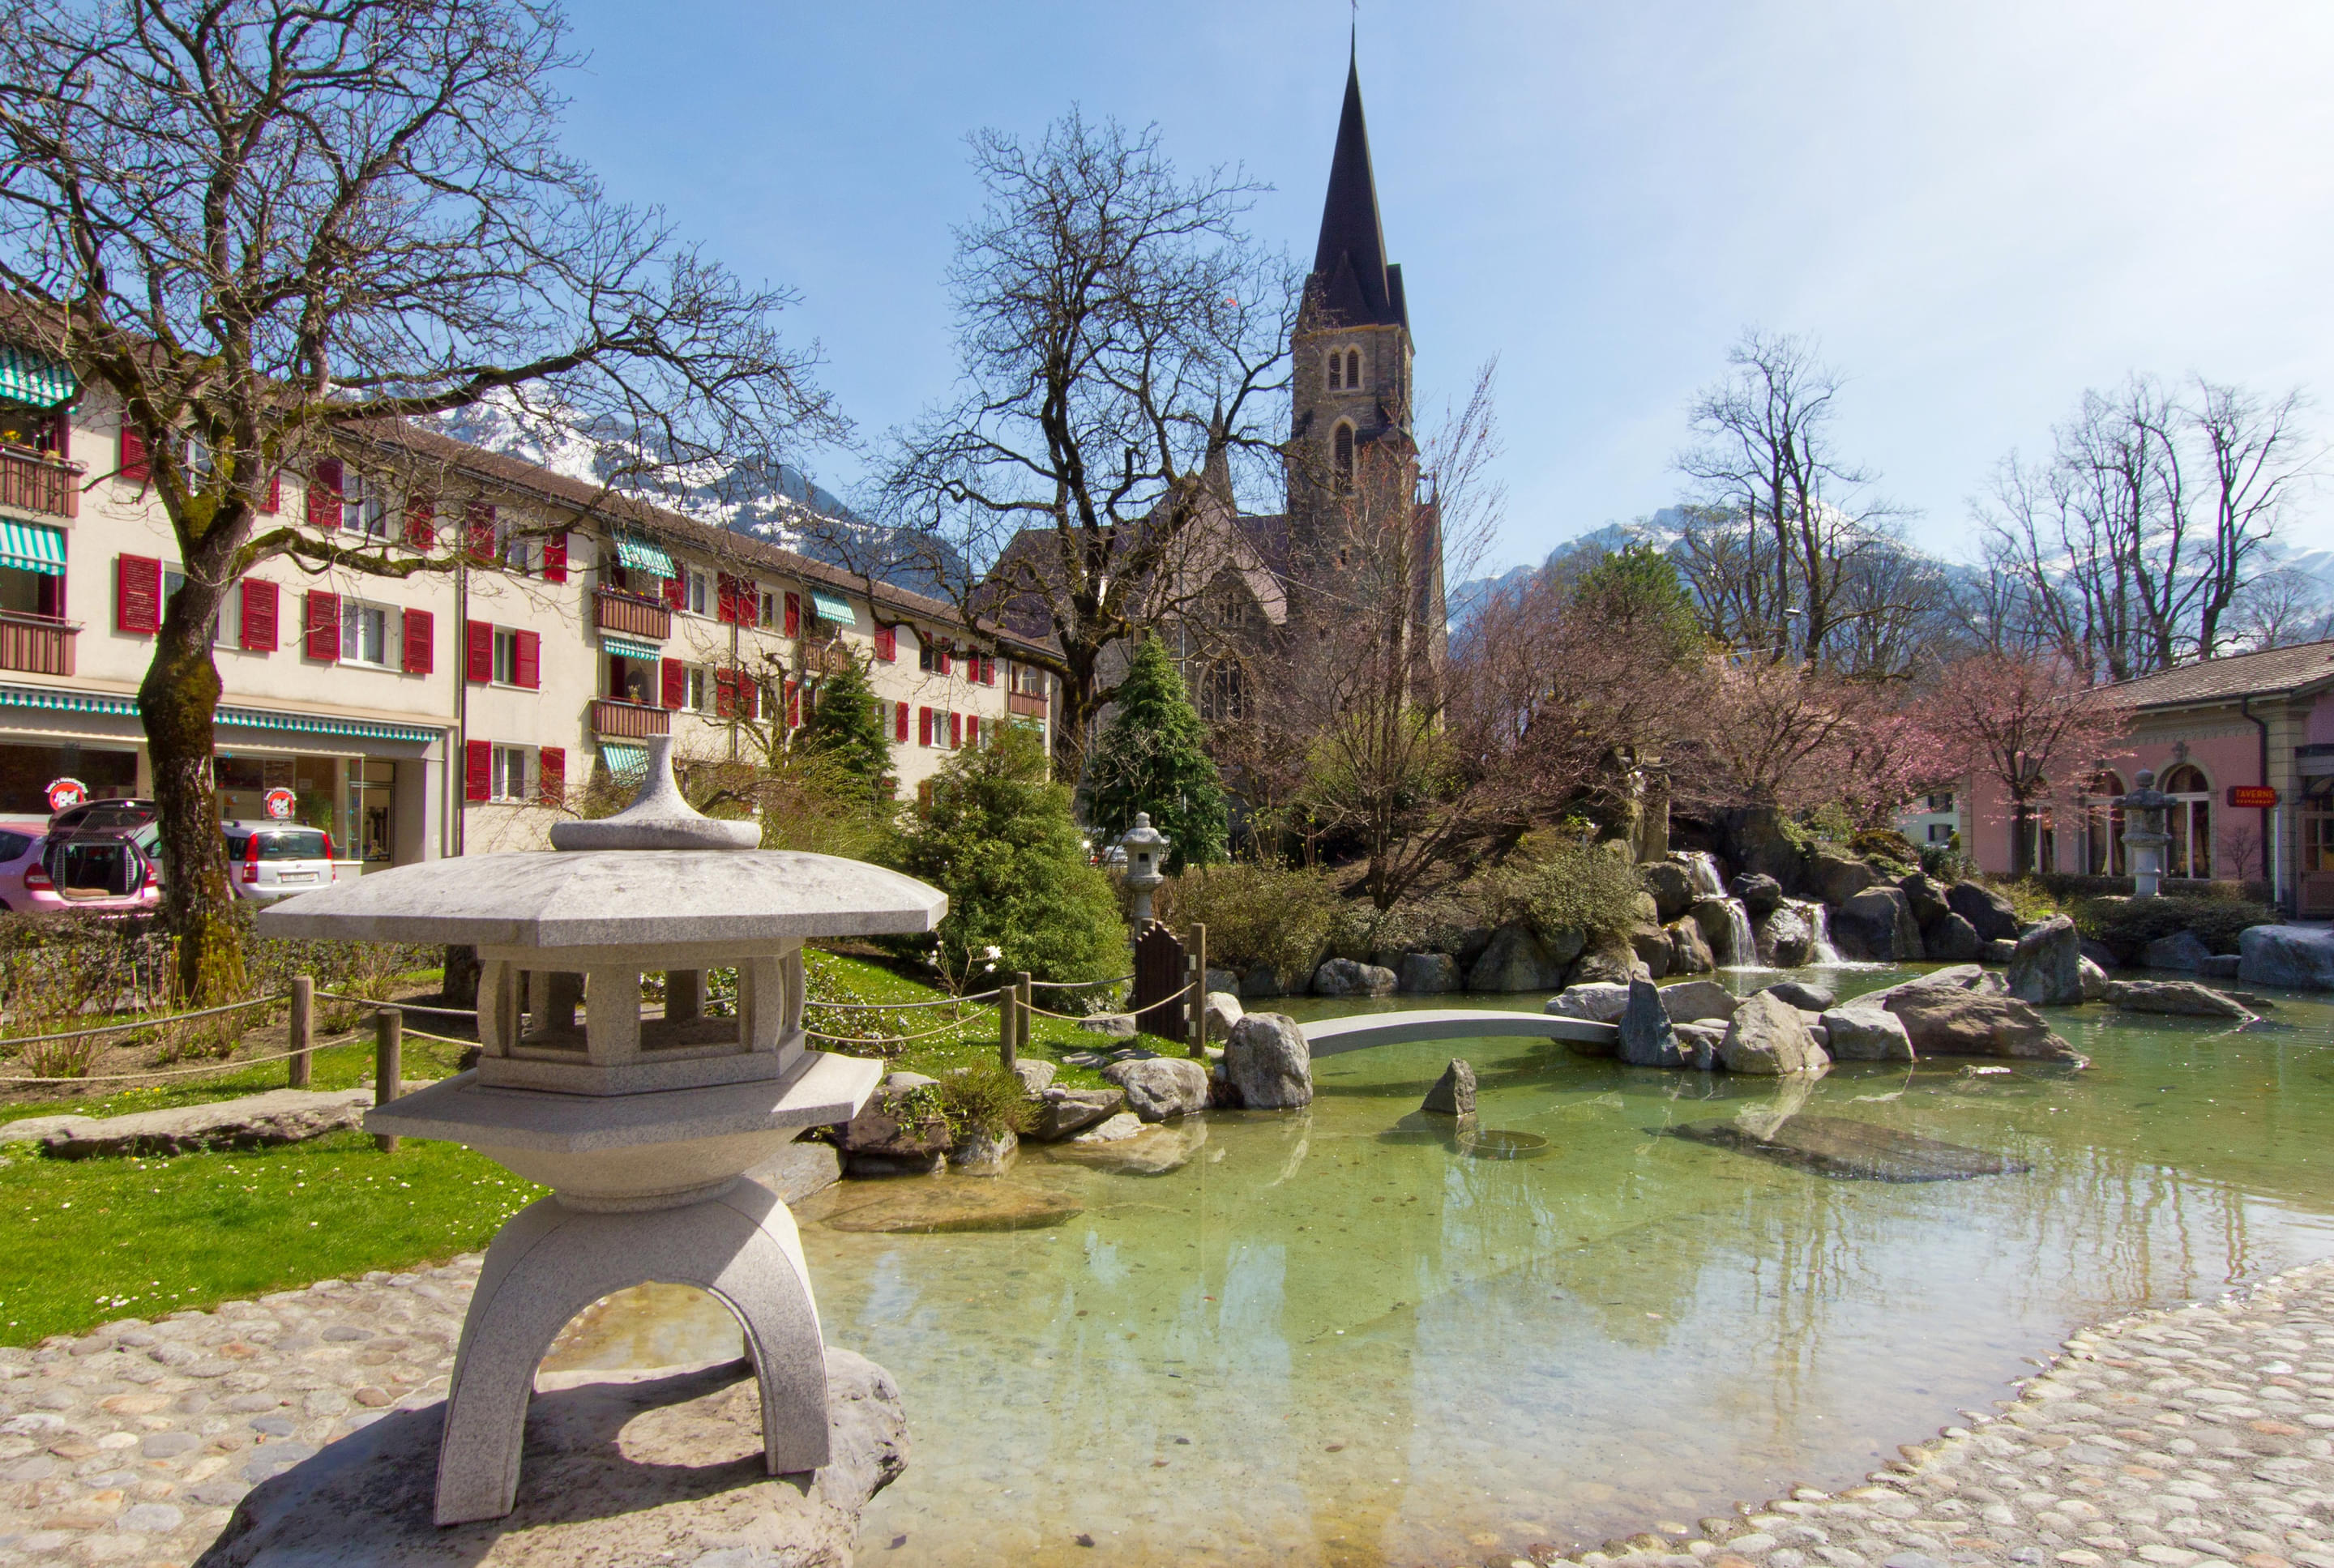 Interlaken Monastery And Castle Overview